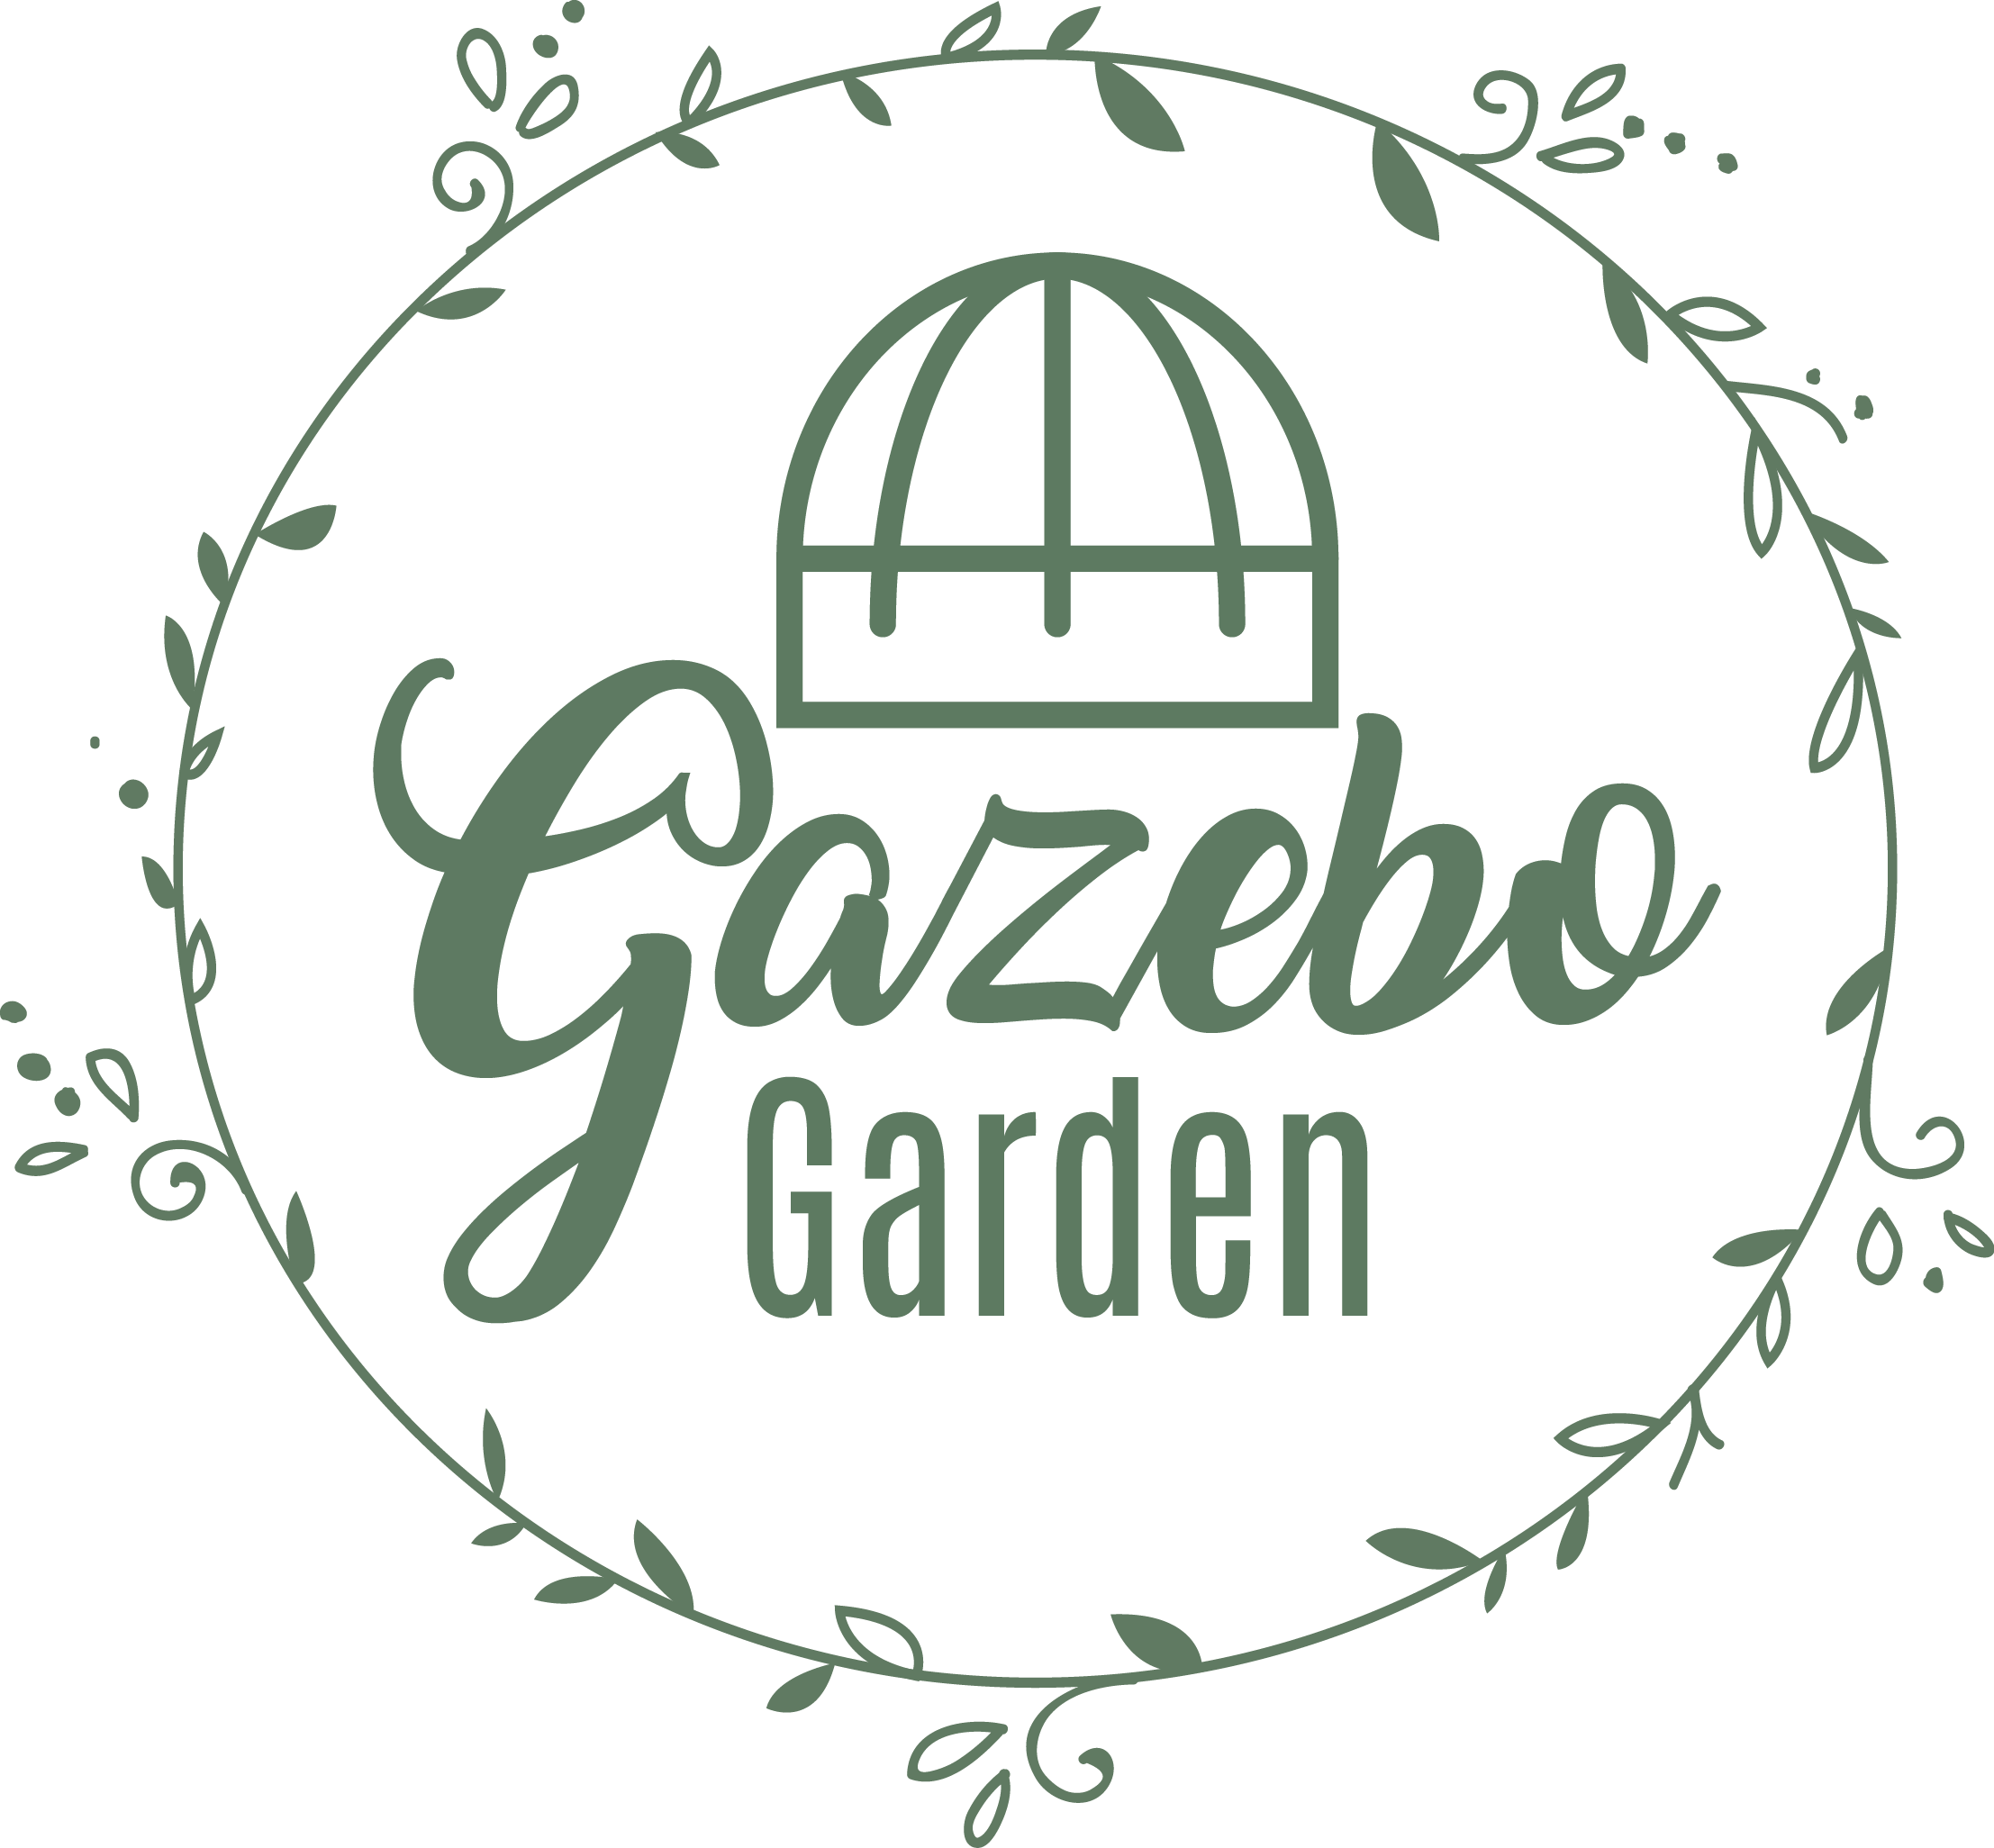 Gazebo garden